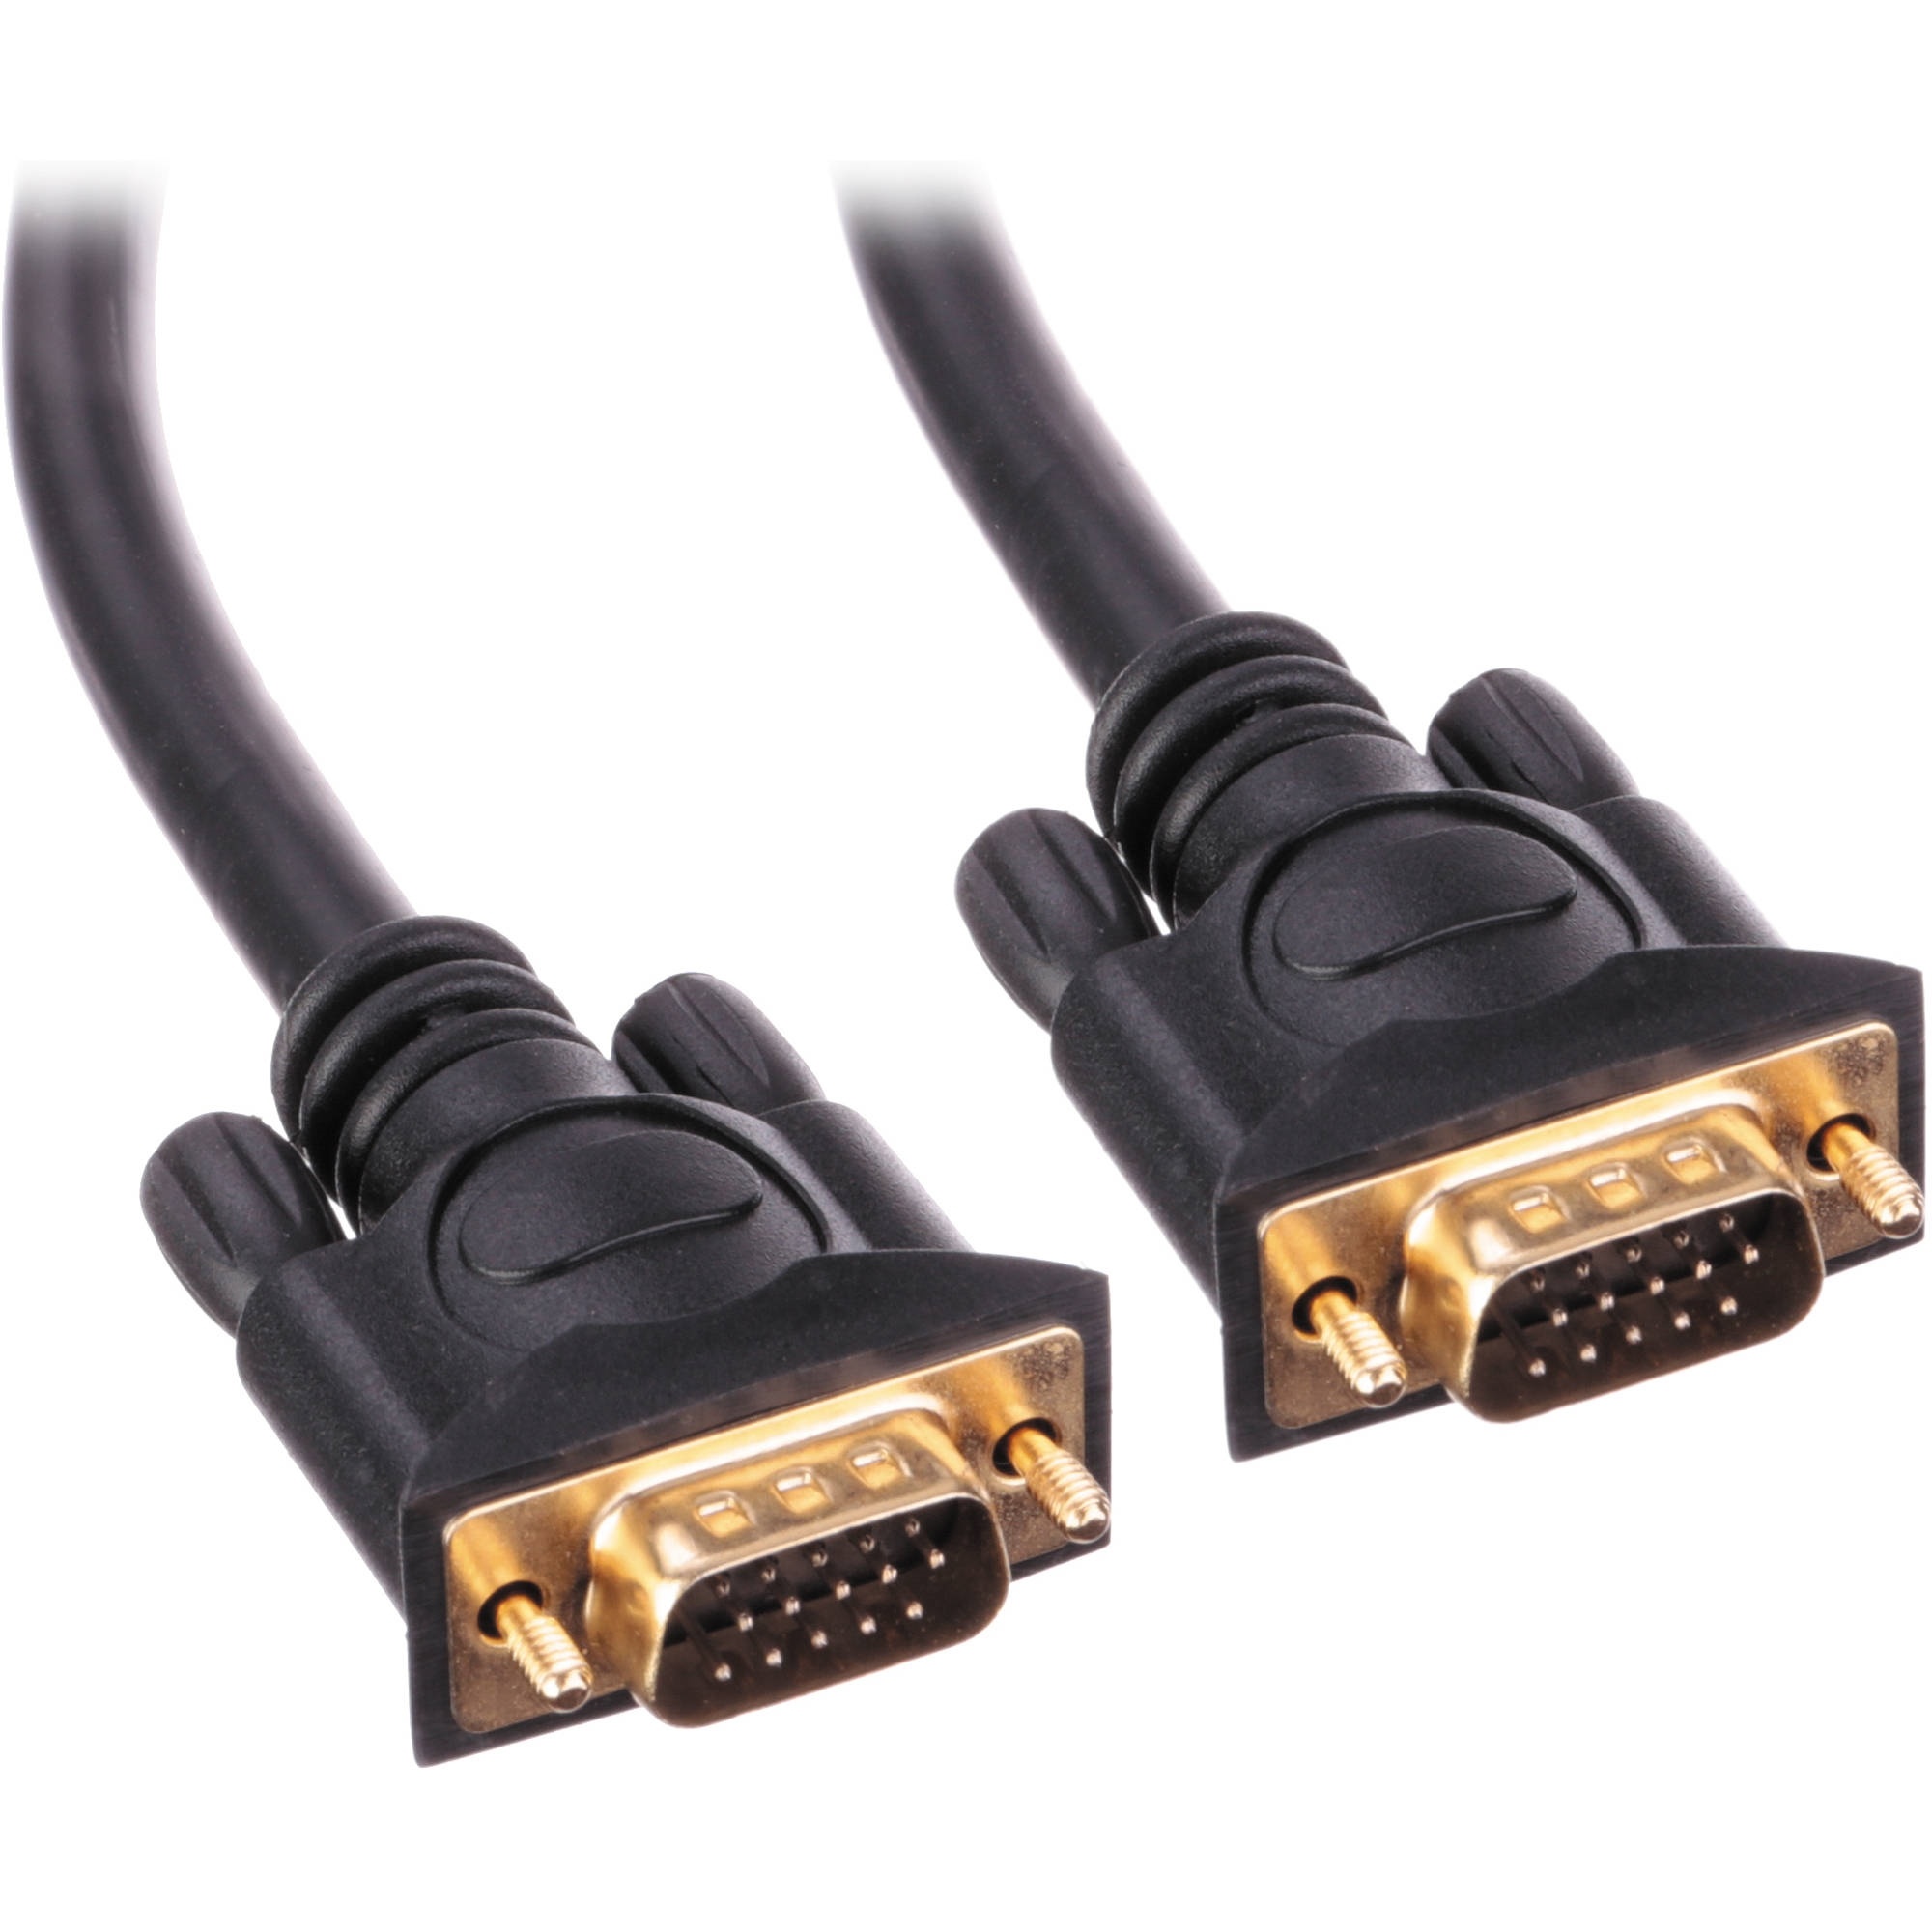 Pearstone 10' Premium VGA Male to Male Cable